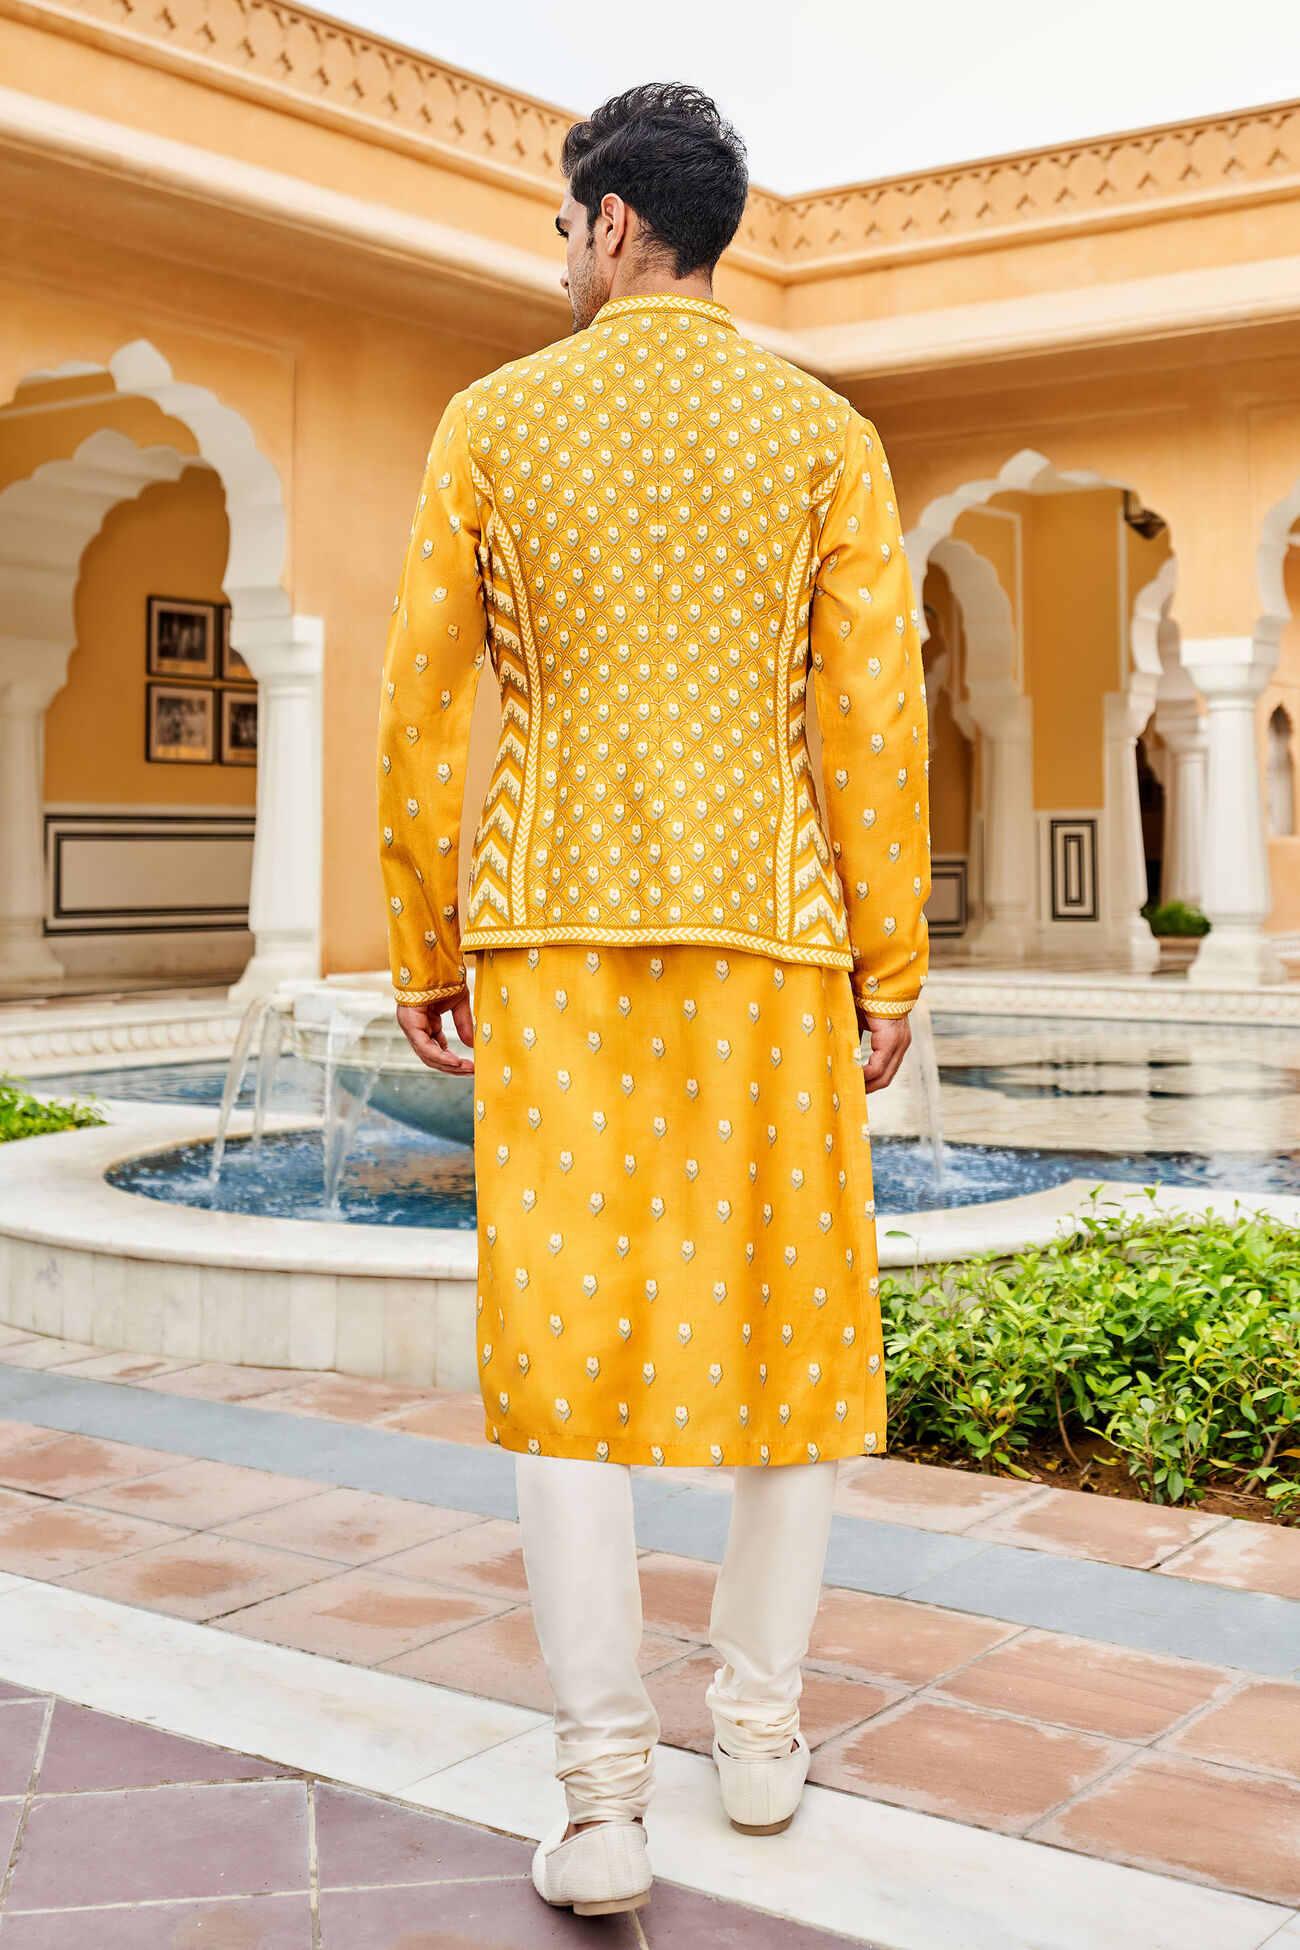 Inan Nehru Jacket - Mustard, Mustard, image 3